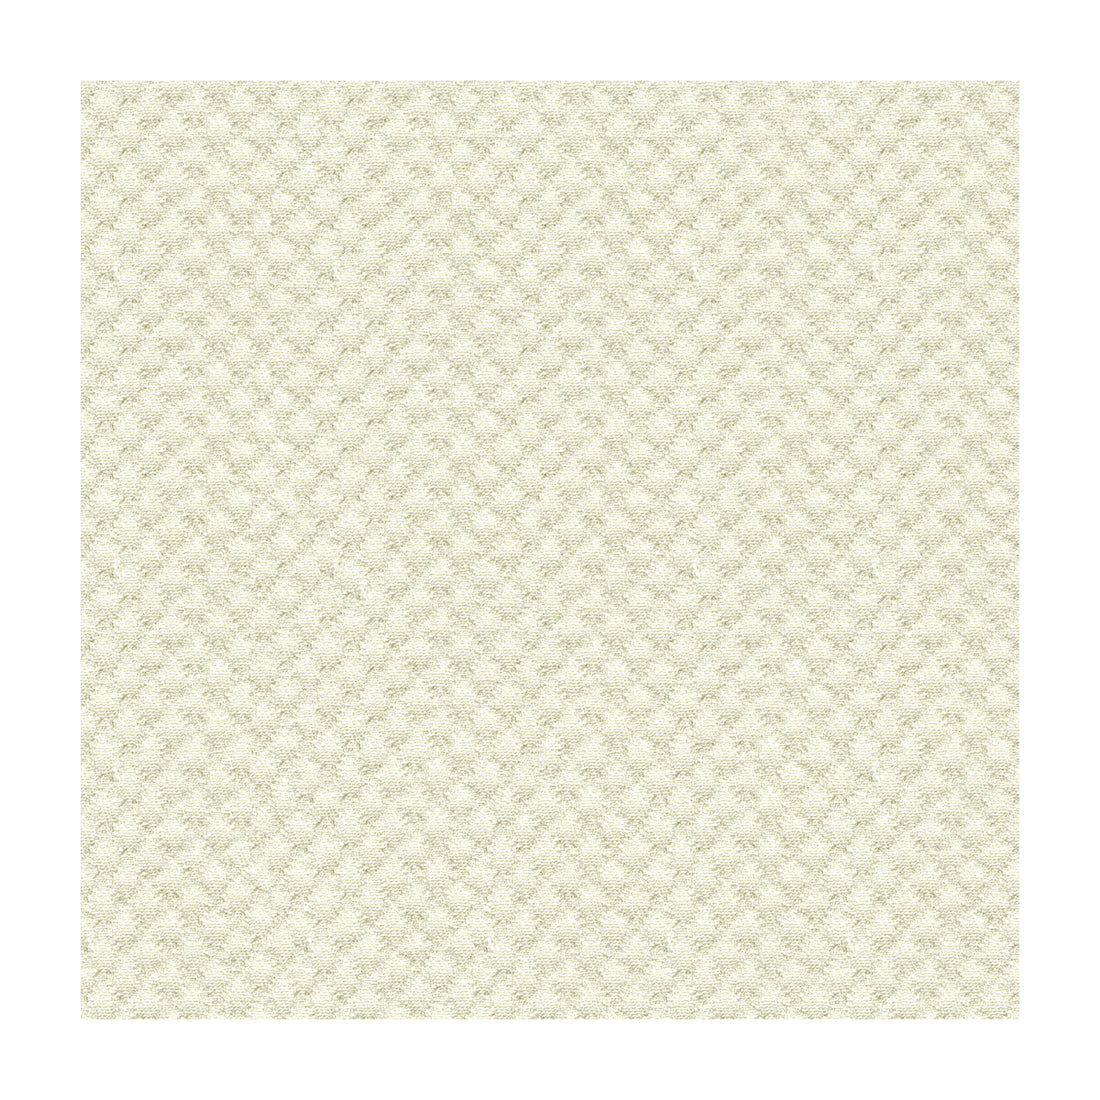 Kravet Design fabric in 25807-1 color - pattern 25807.1.0 - by Kravet Design in the Sunbrella collection